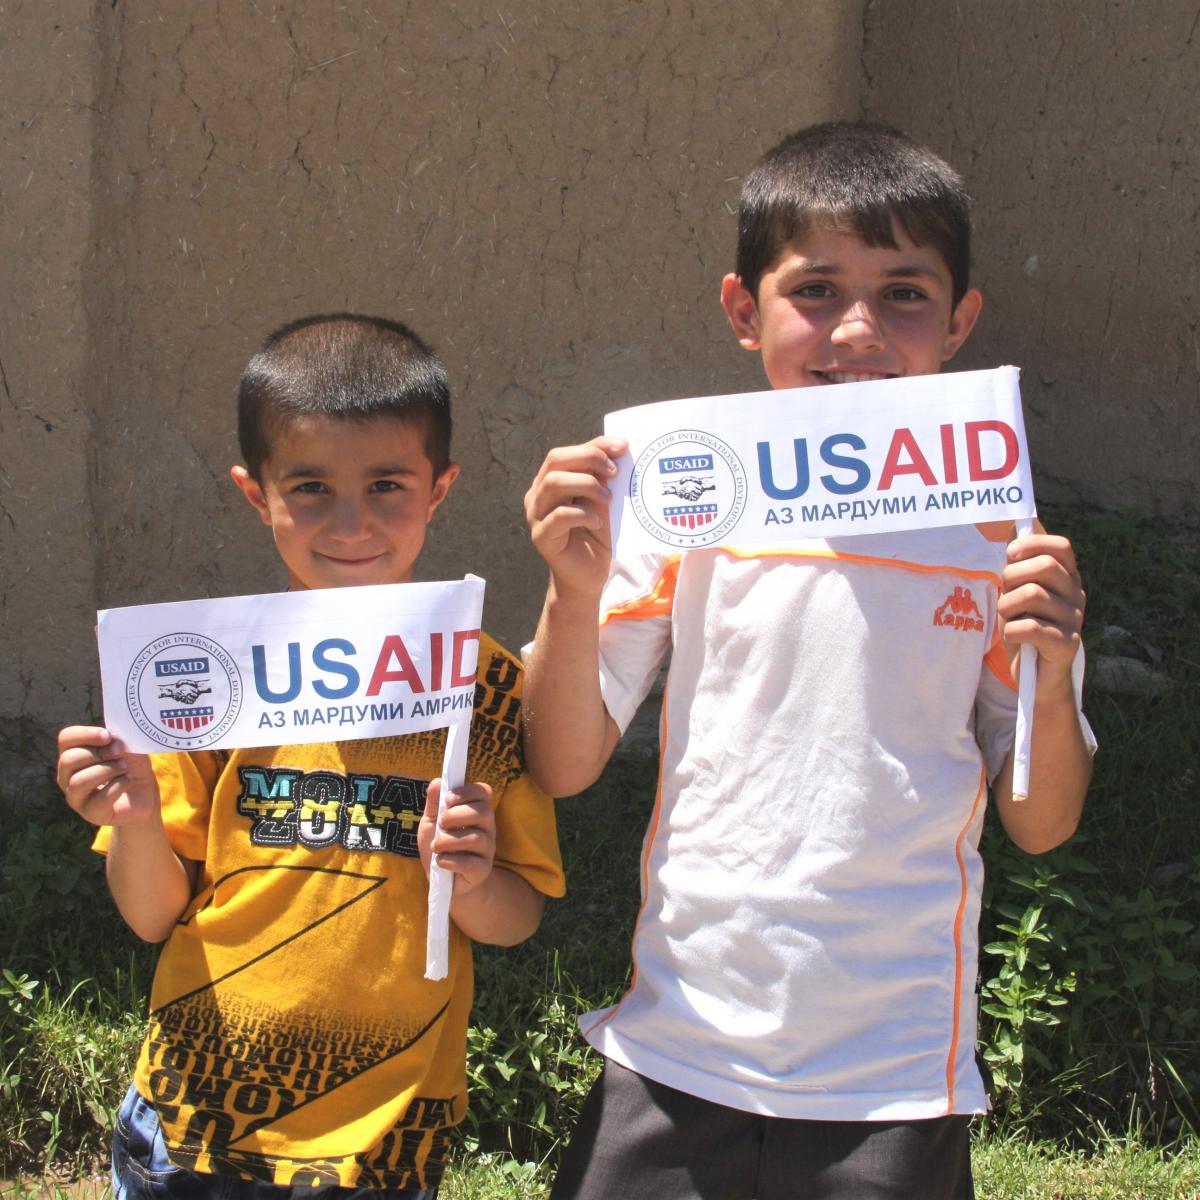 Миссия USAID в Таджикистане отмечает 60-летие Агентства и 30-летие прогресса развития в стране